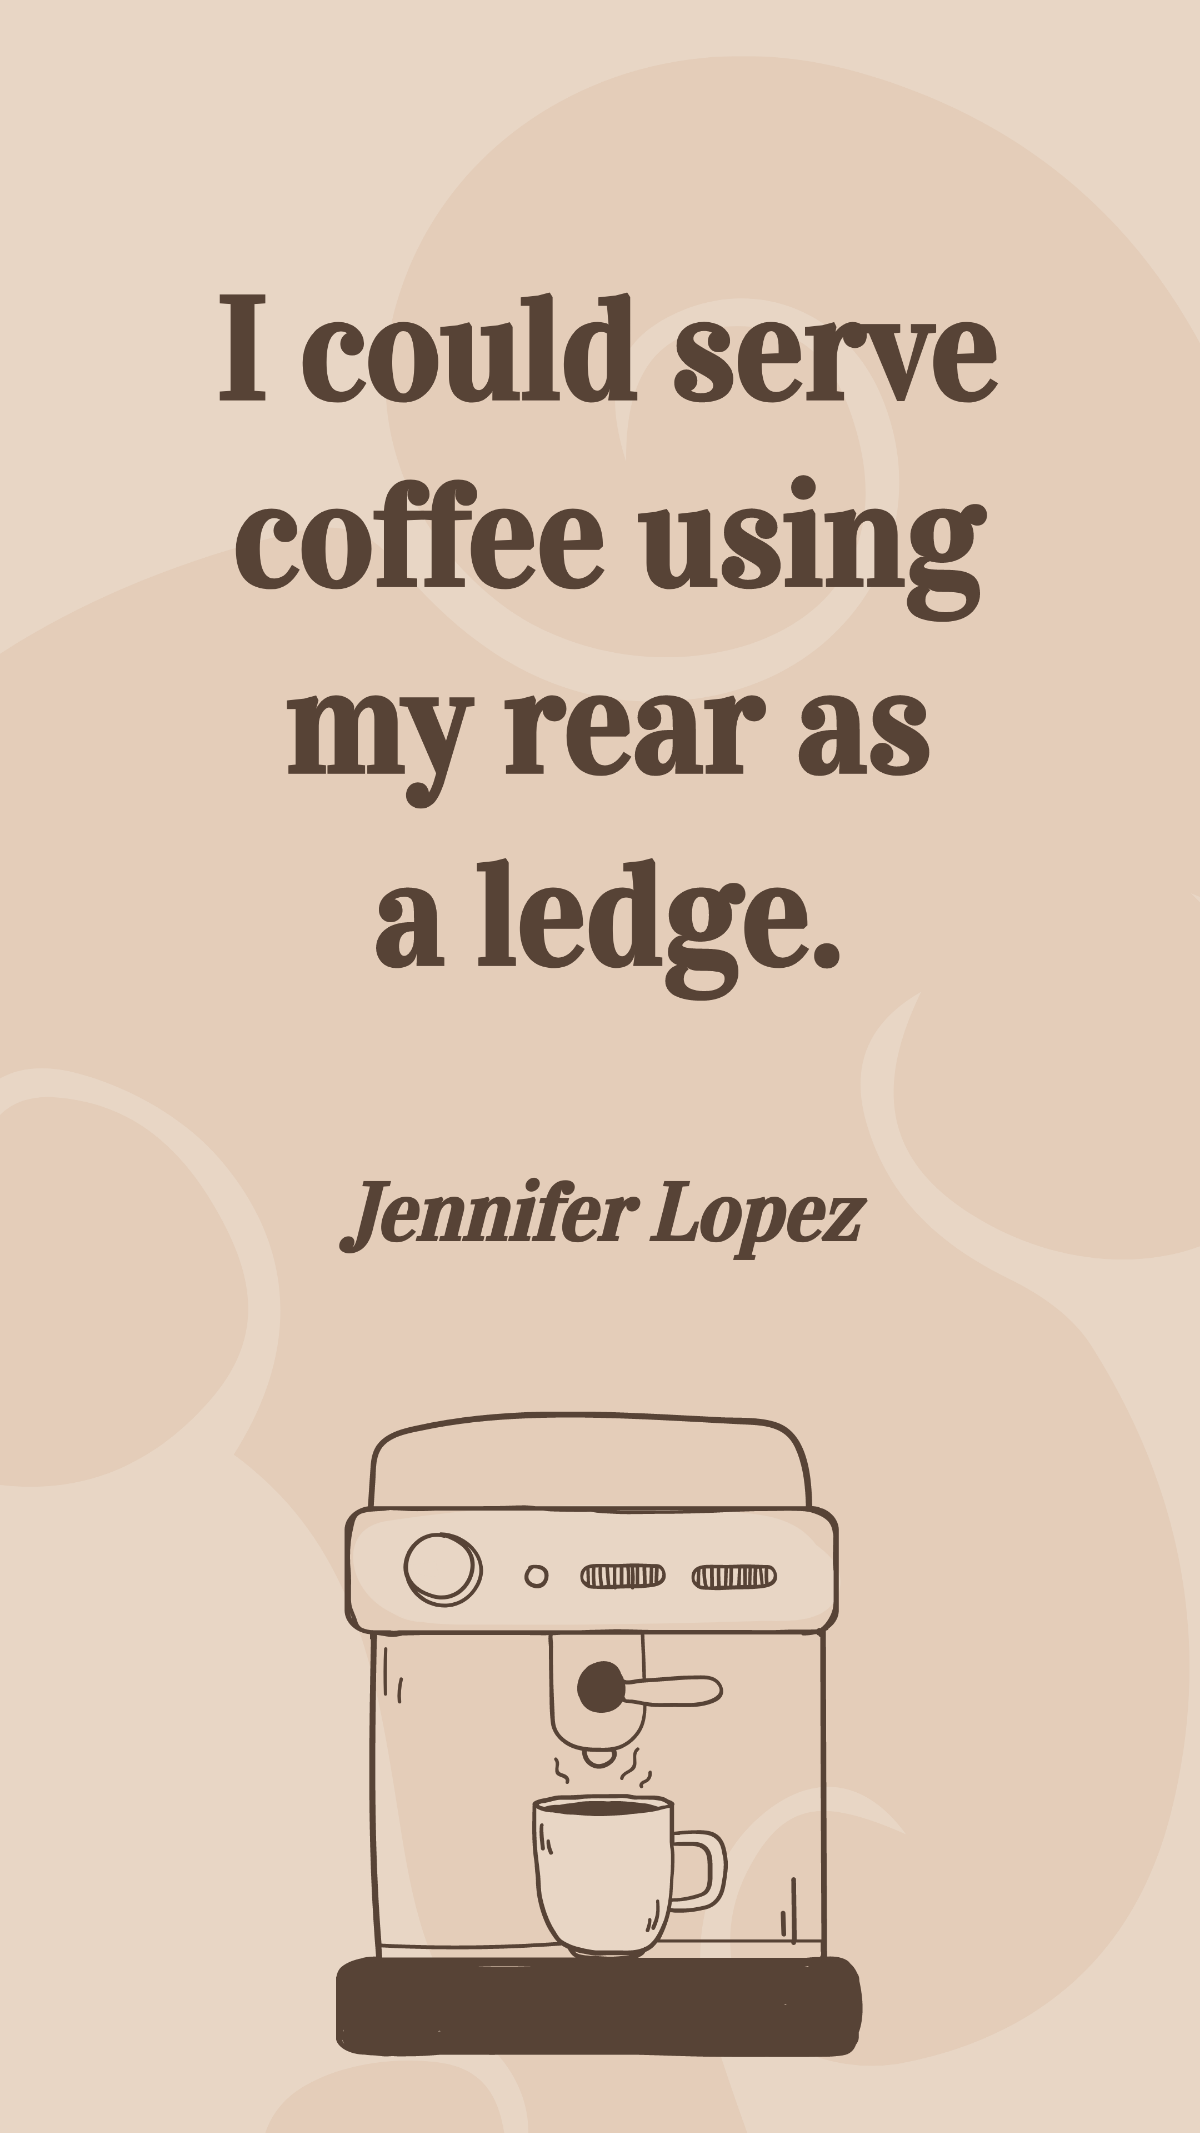 Jennifer Lopez - I could serve coffee using my rear as a ledge.